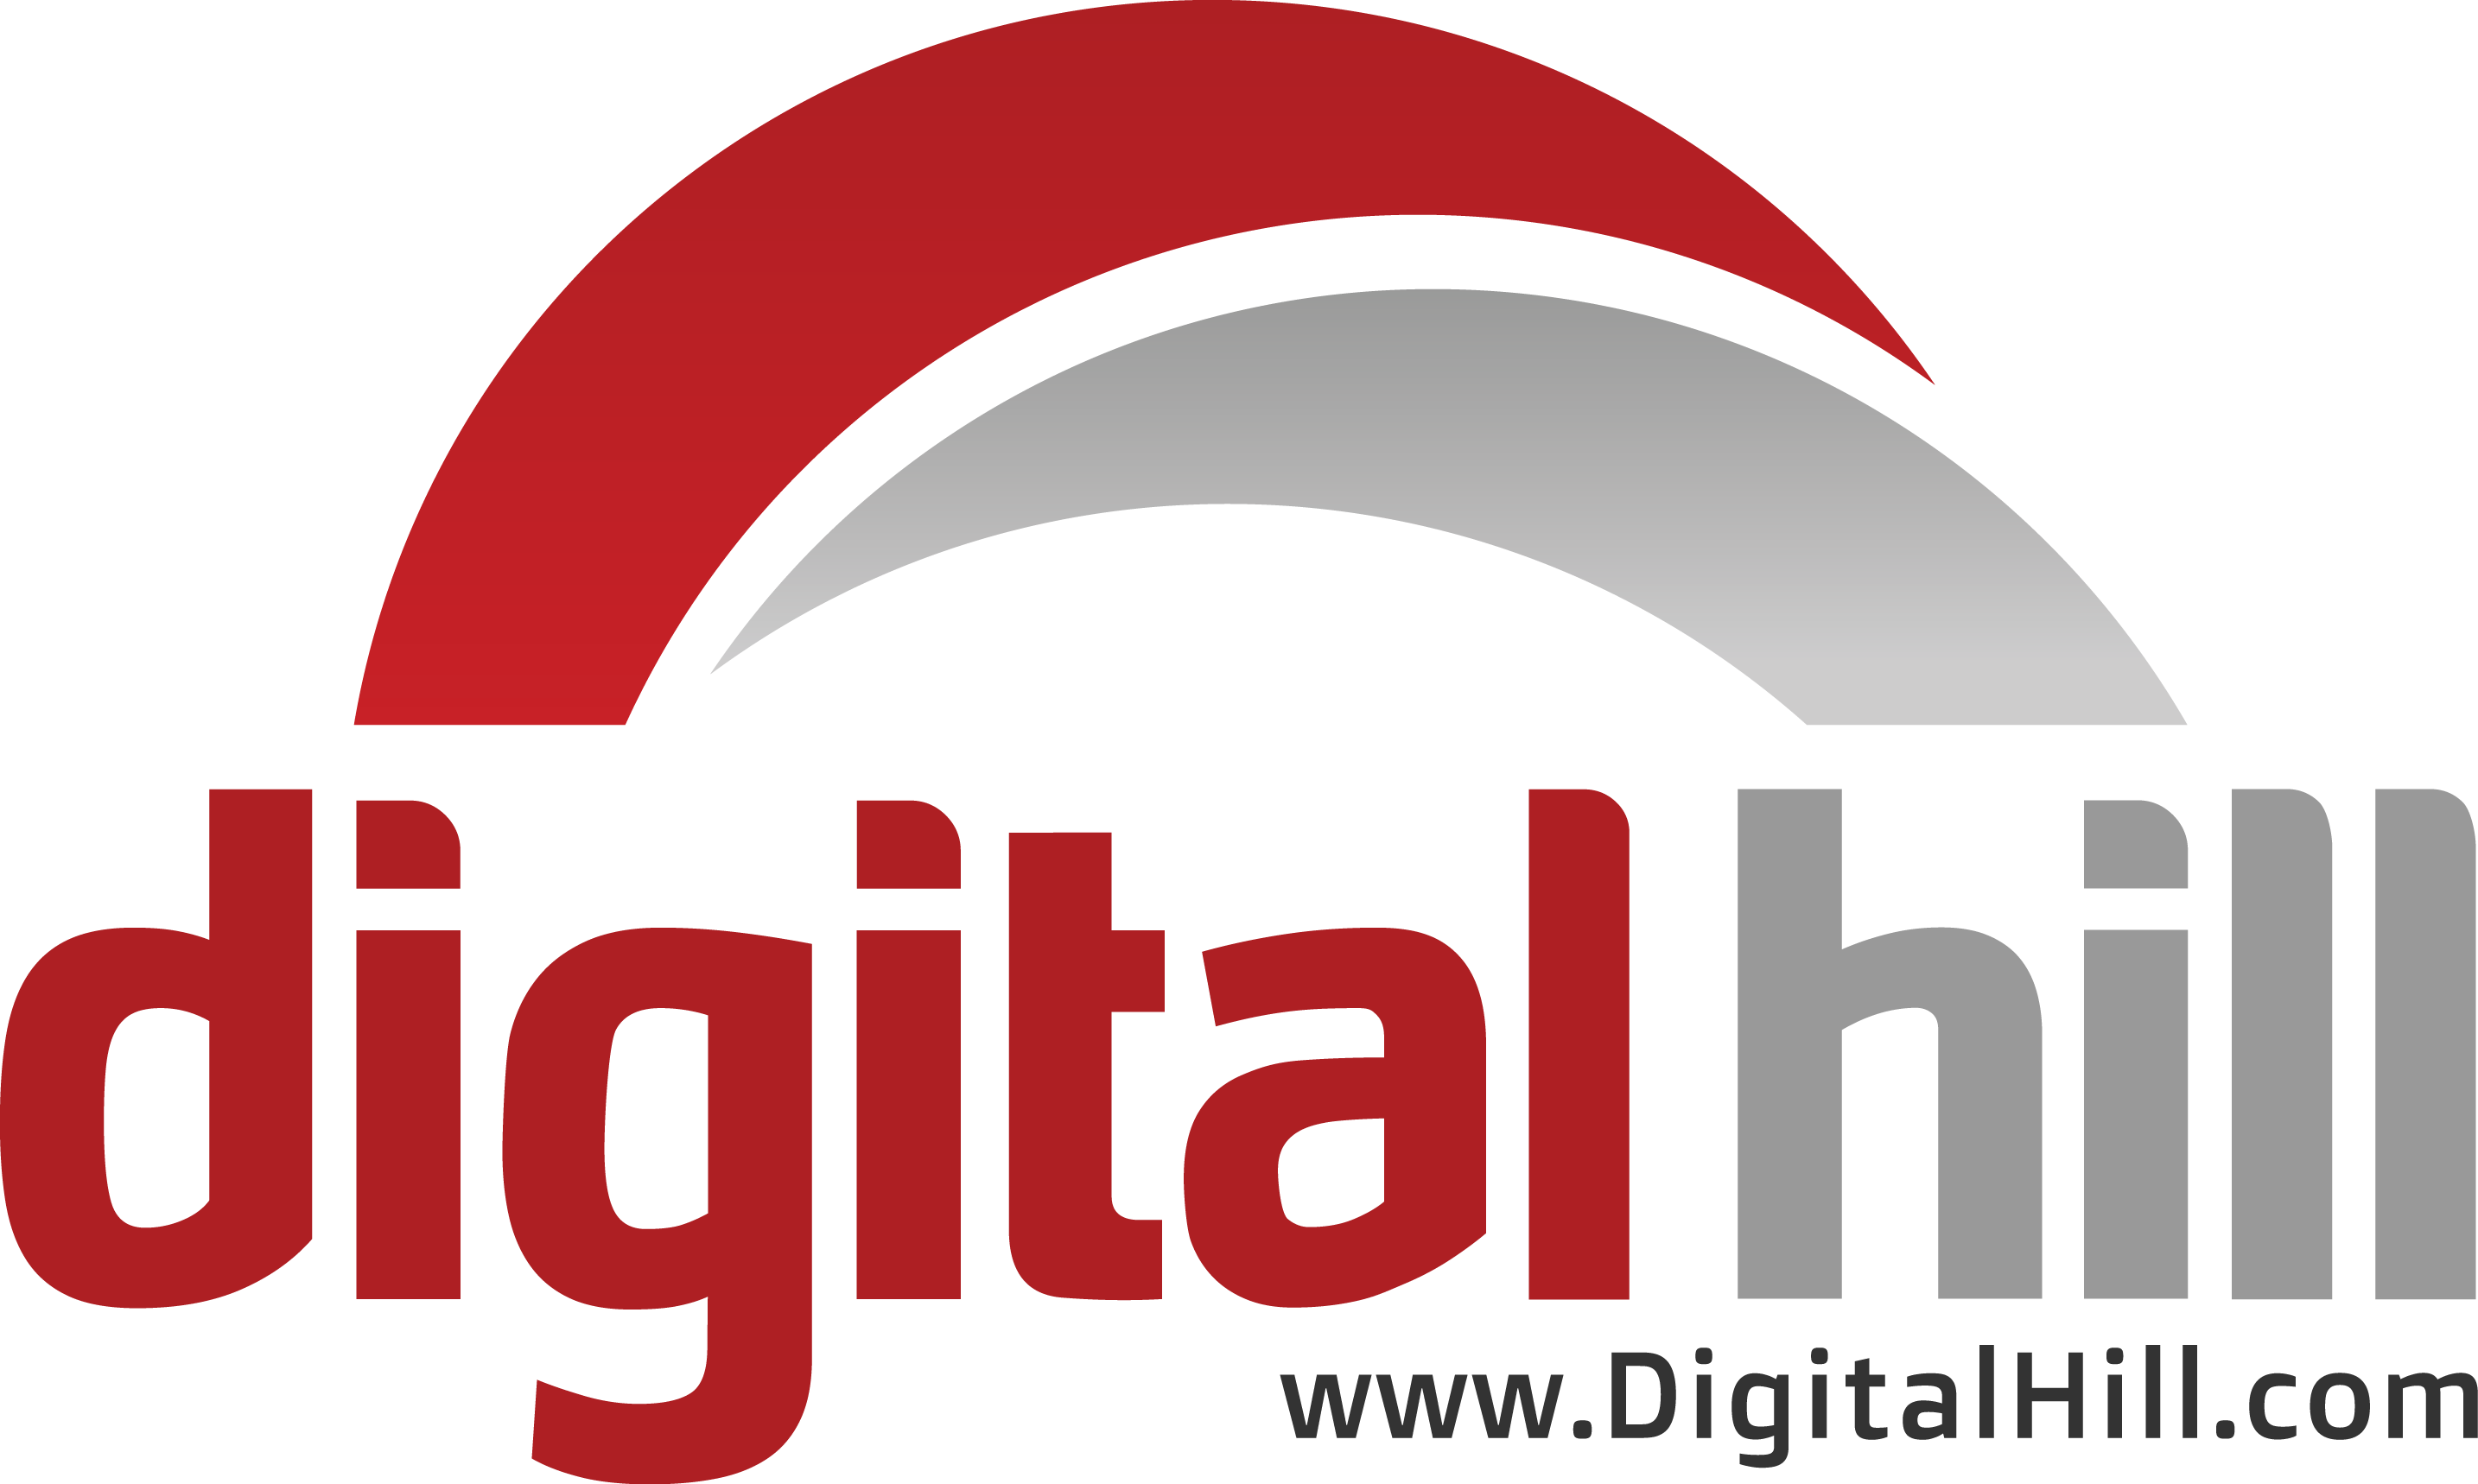 Go to Digital Hill's Website